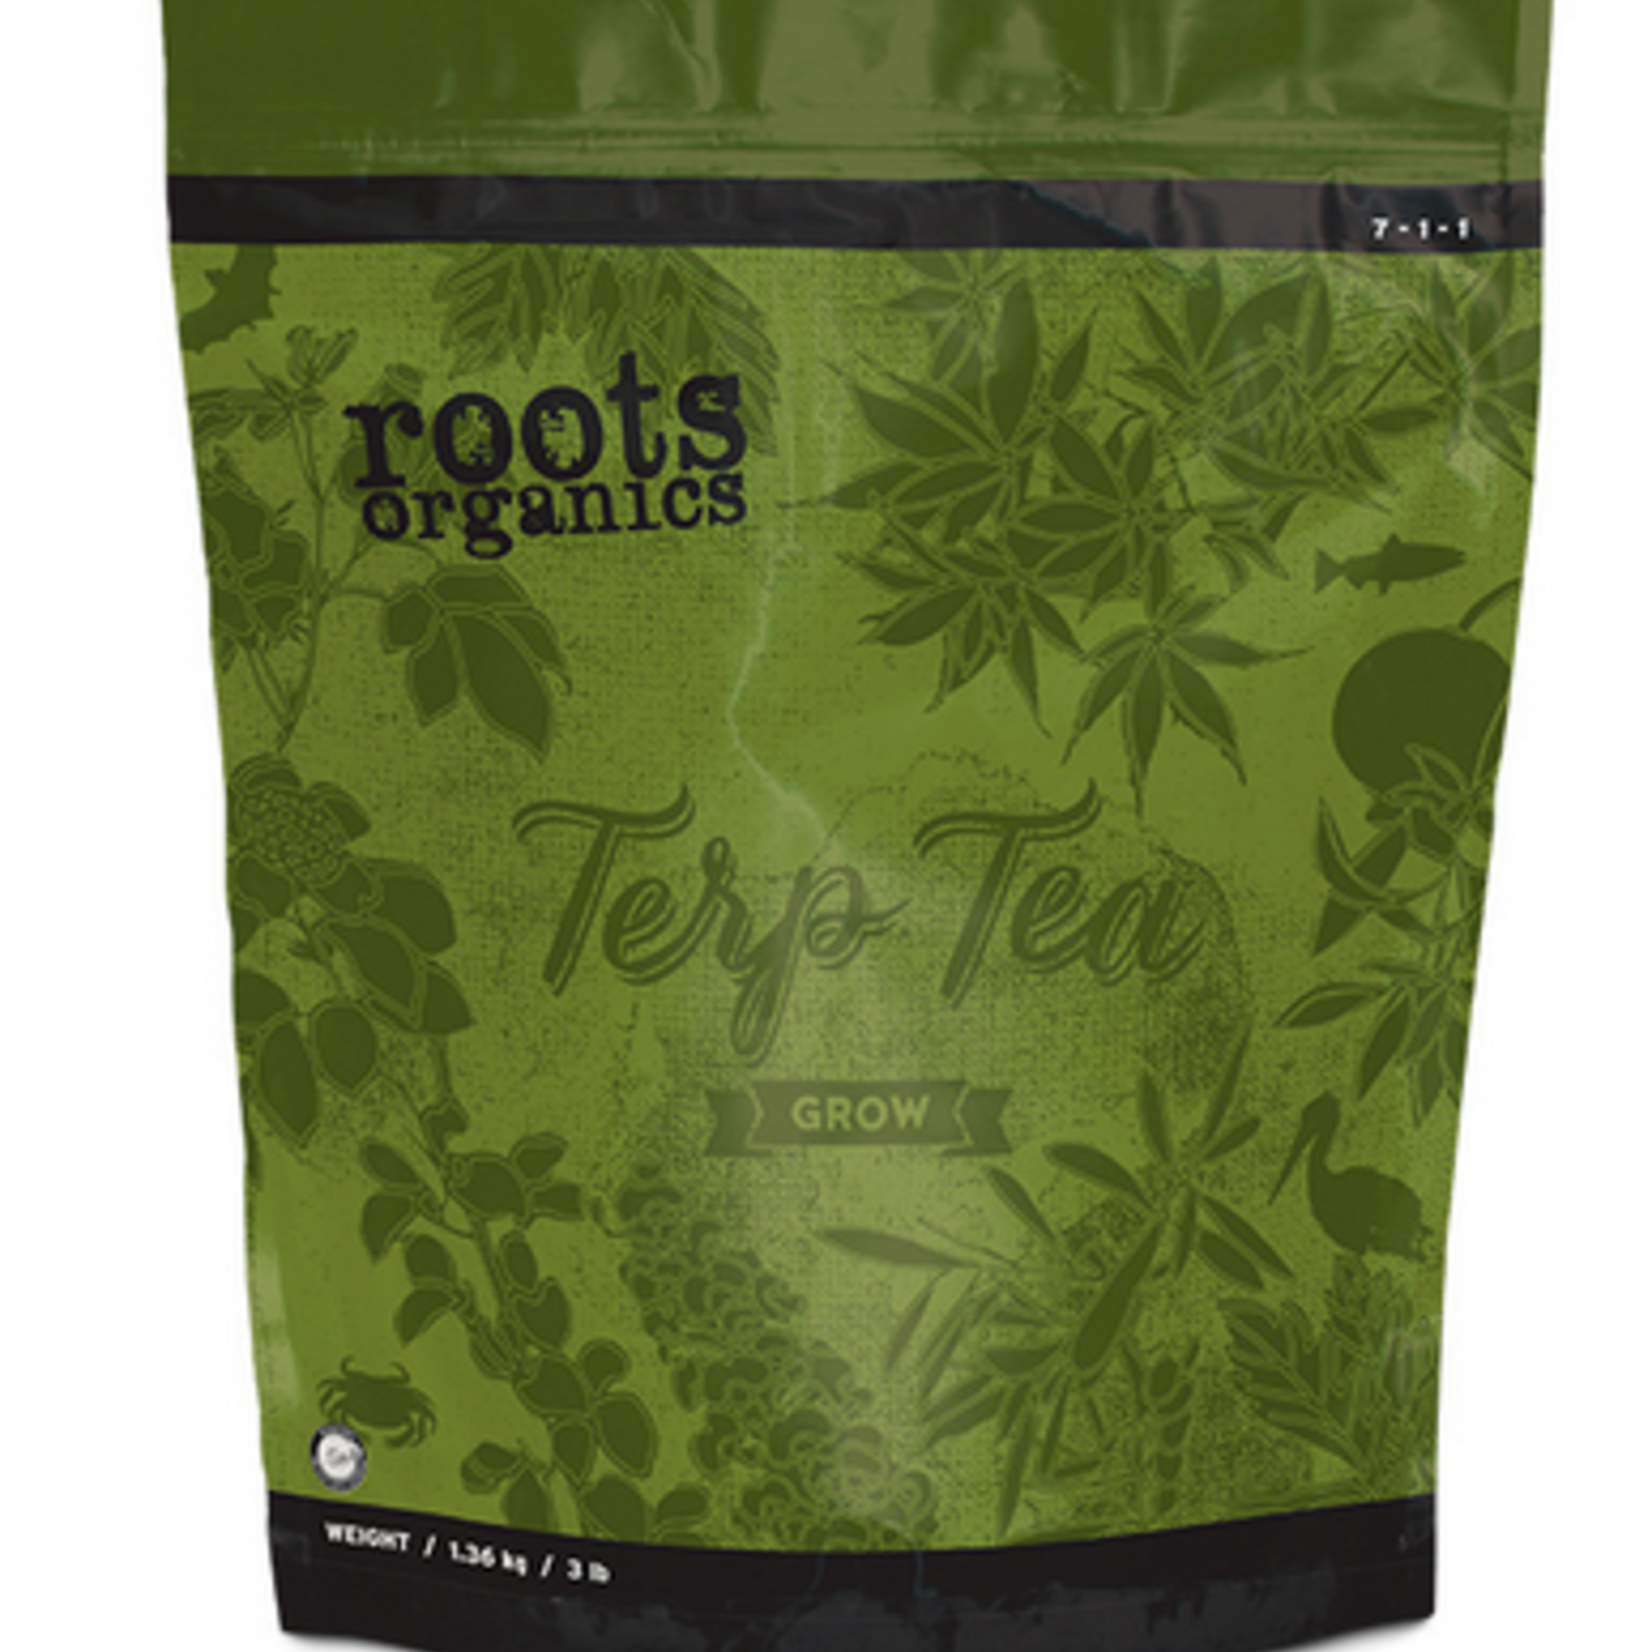 Roots Organic Roots Organic Terp Tea Grow 3lb